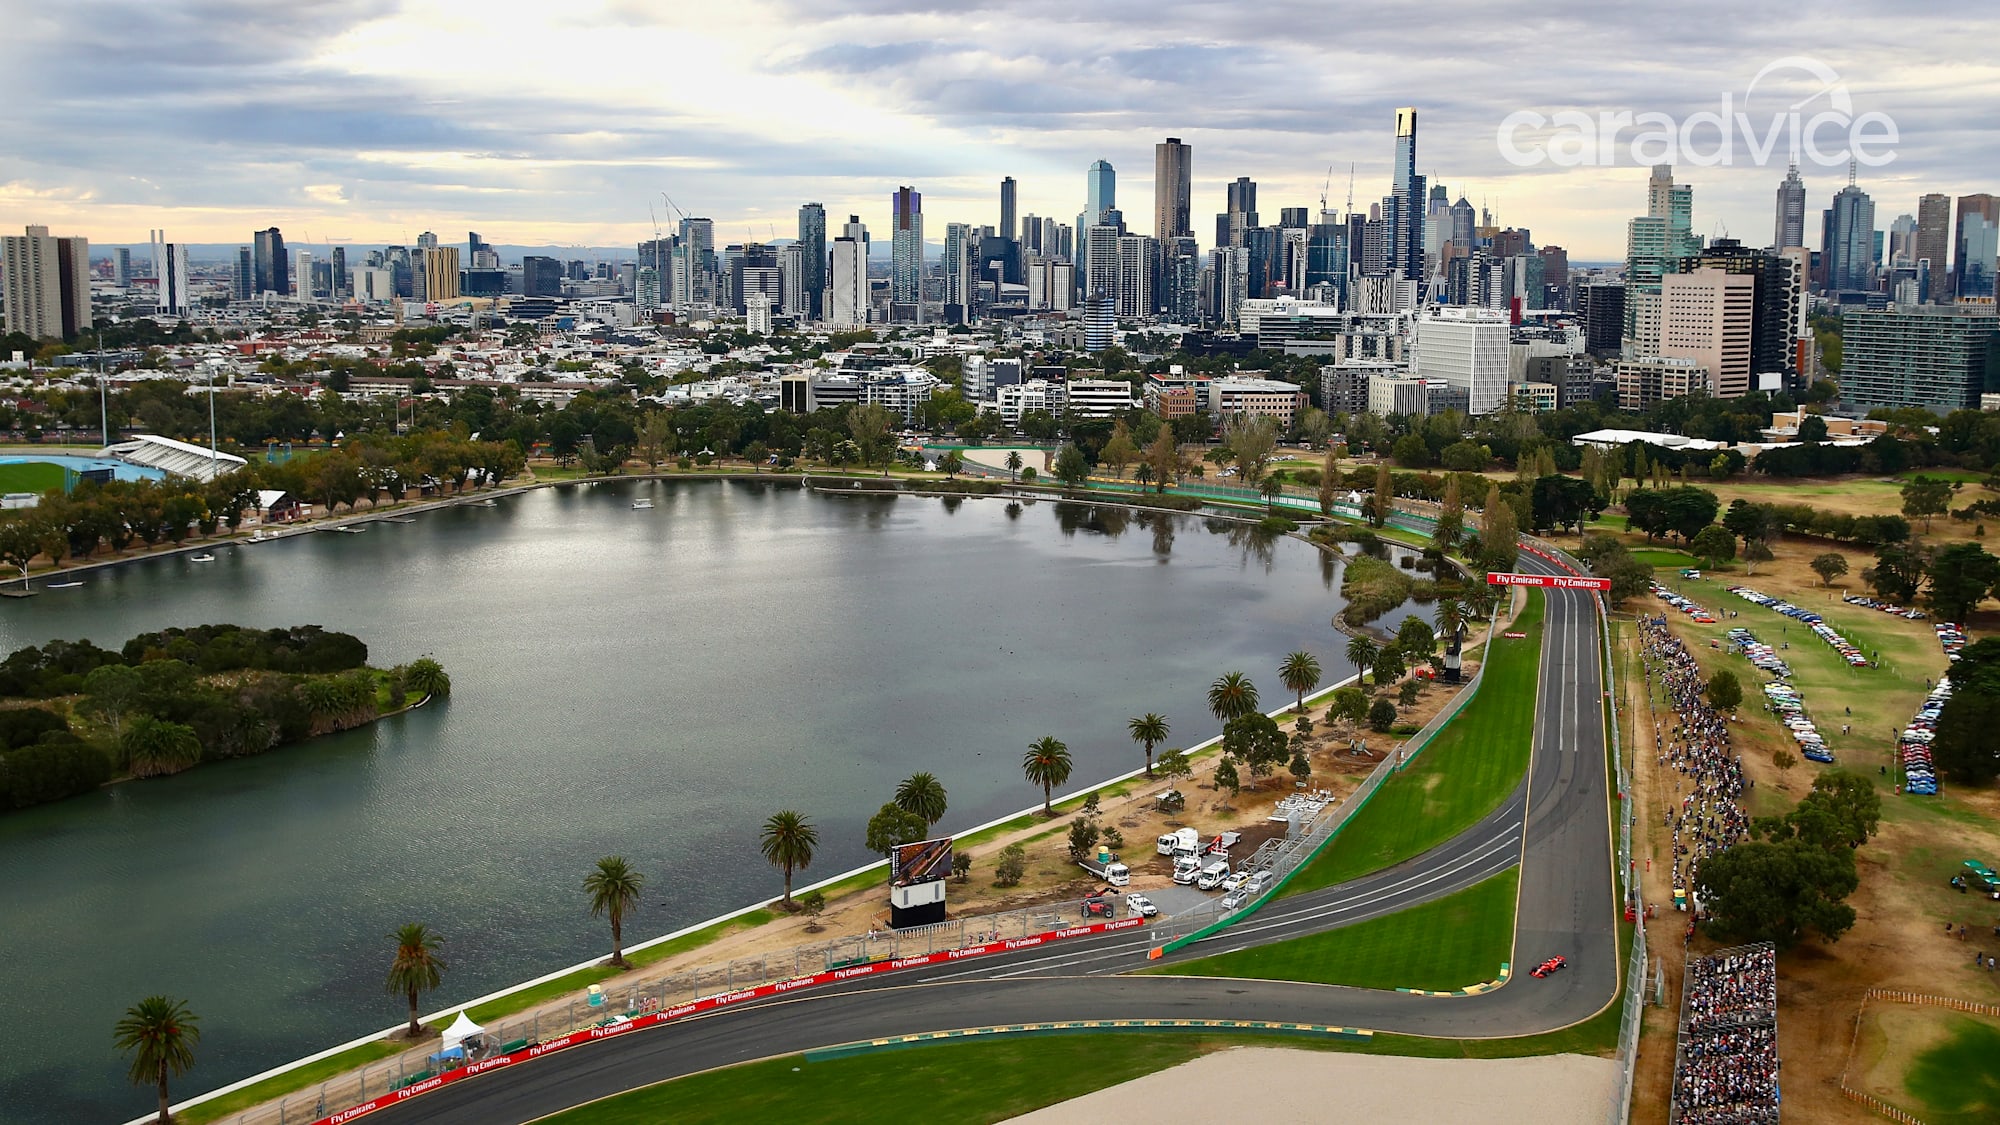 Australian F1 Grand Prix circuit gets major makeover for faster lap